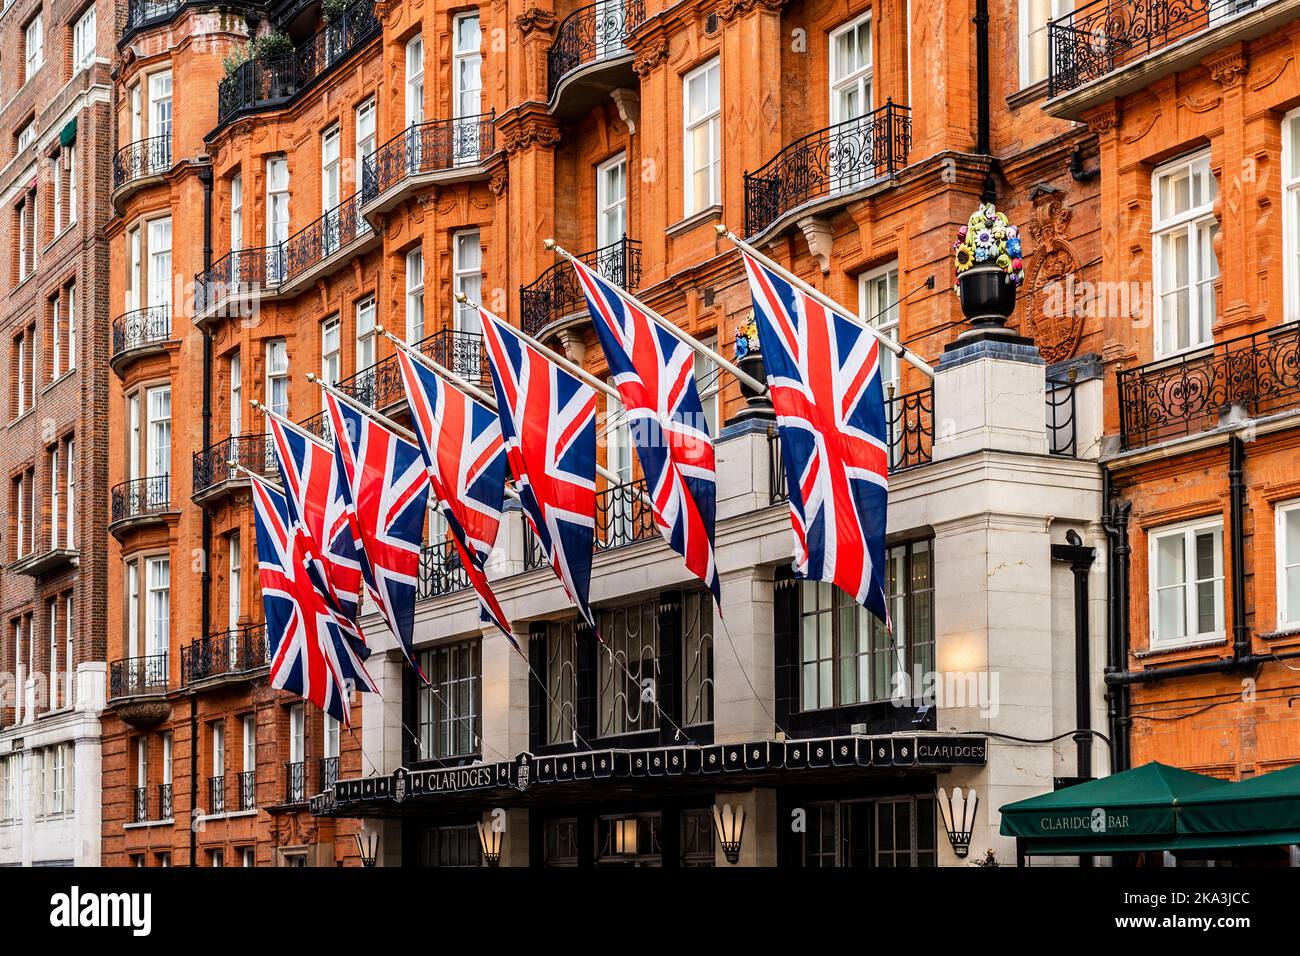 Vor dem Eingang des berühmten Claridge's Hotels im londoner stadtteil mayfair stehen stolze Flaggen der Union Jack. Stockfoto